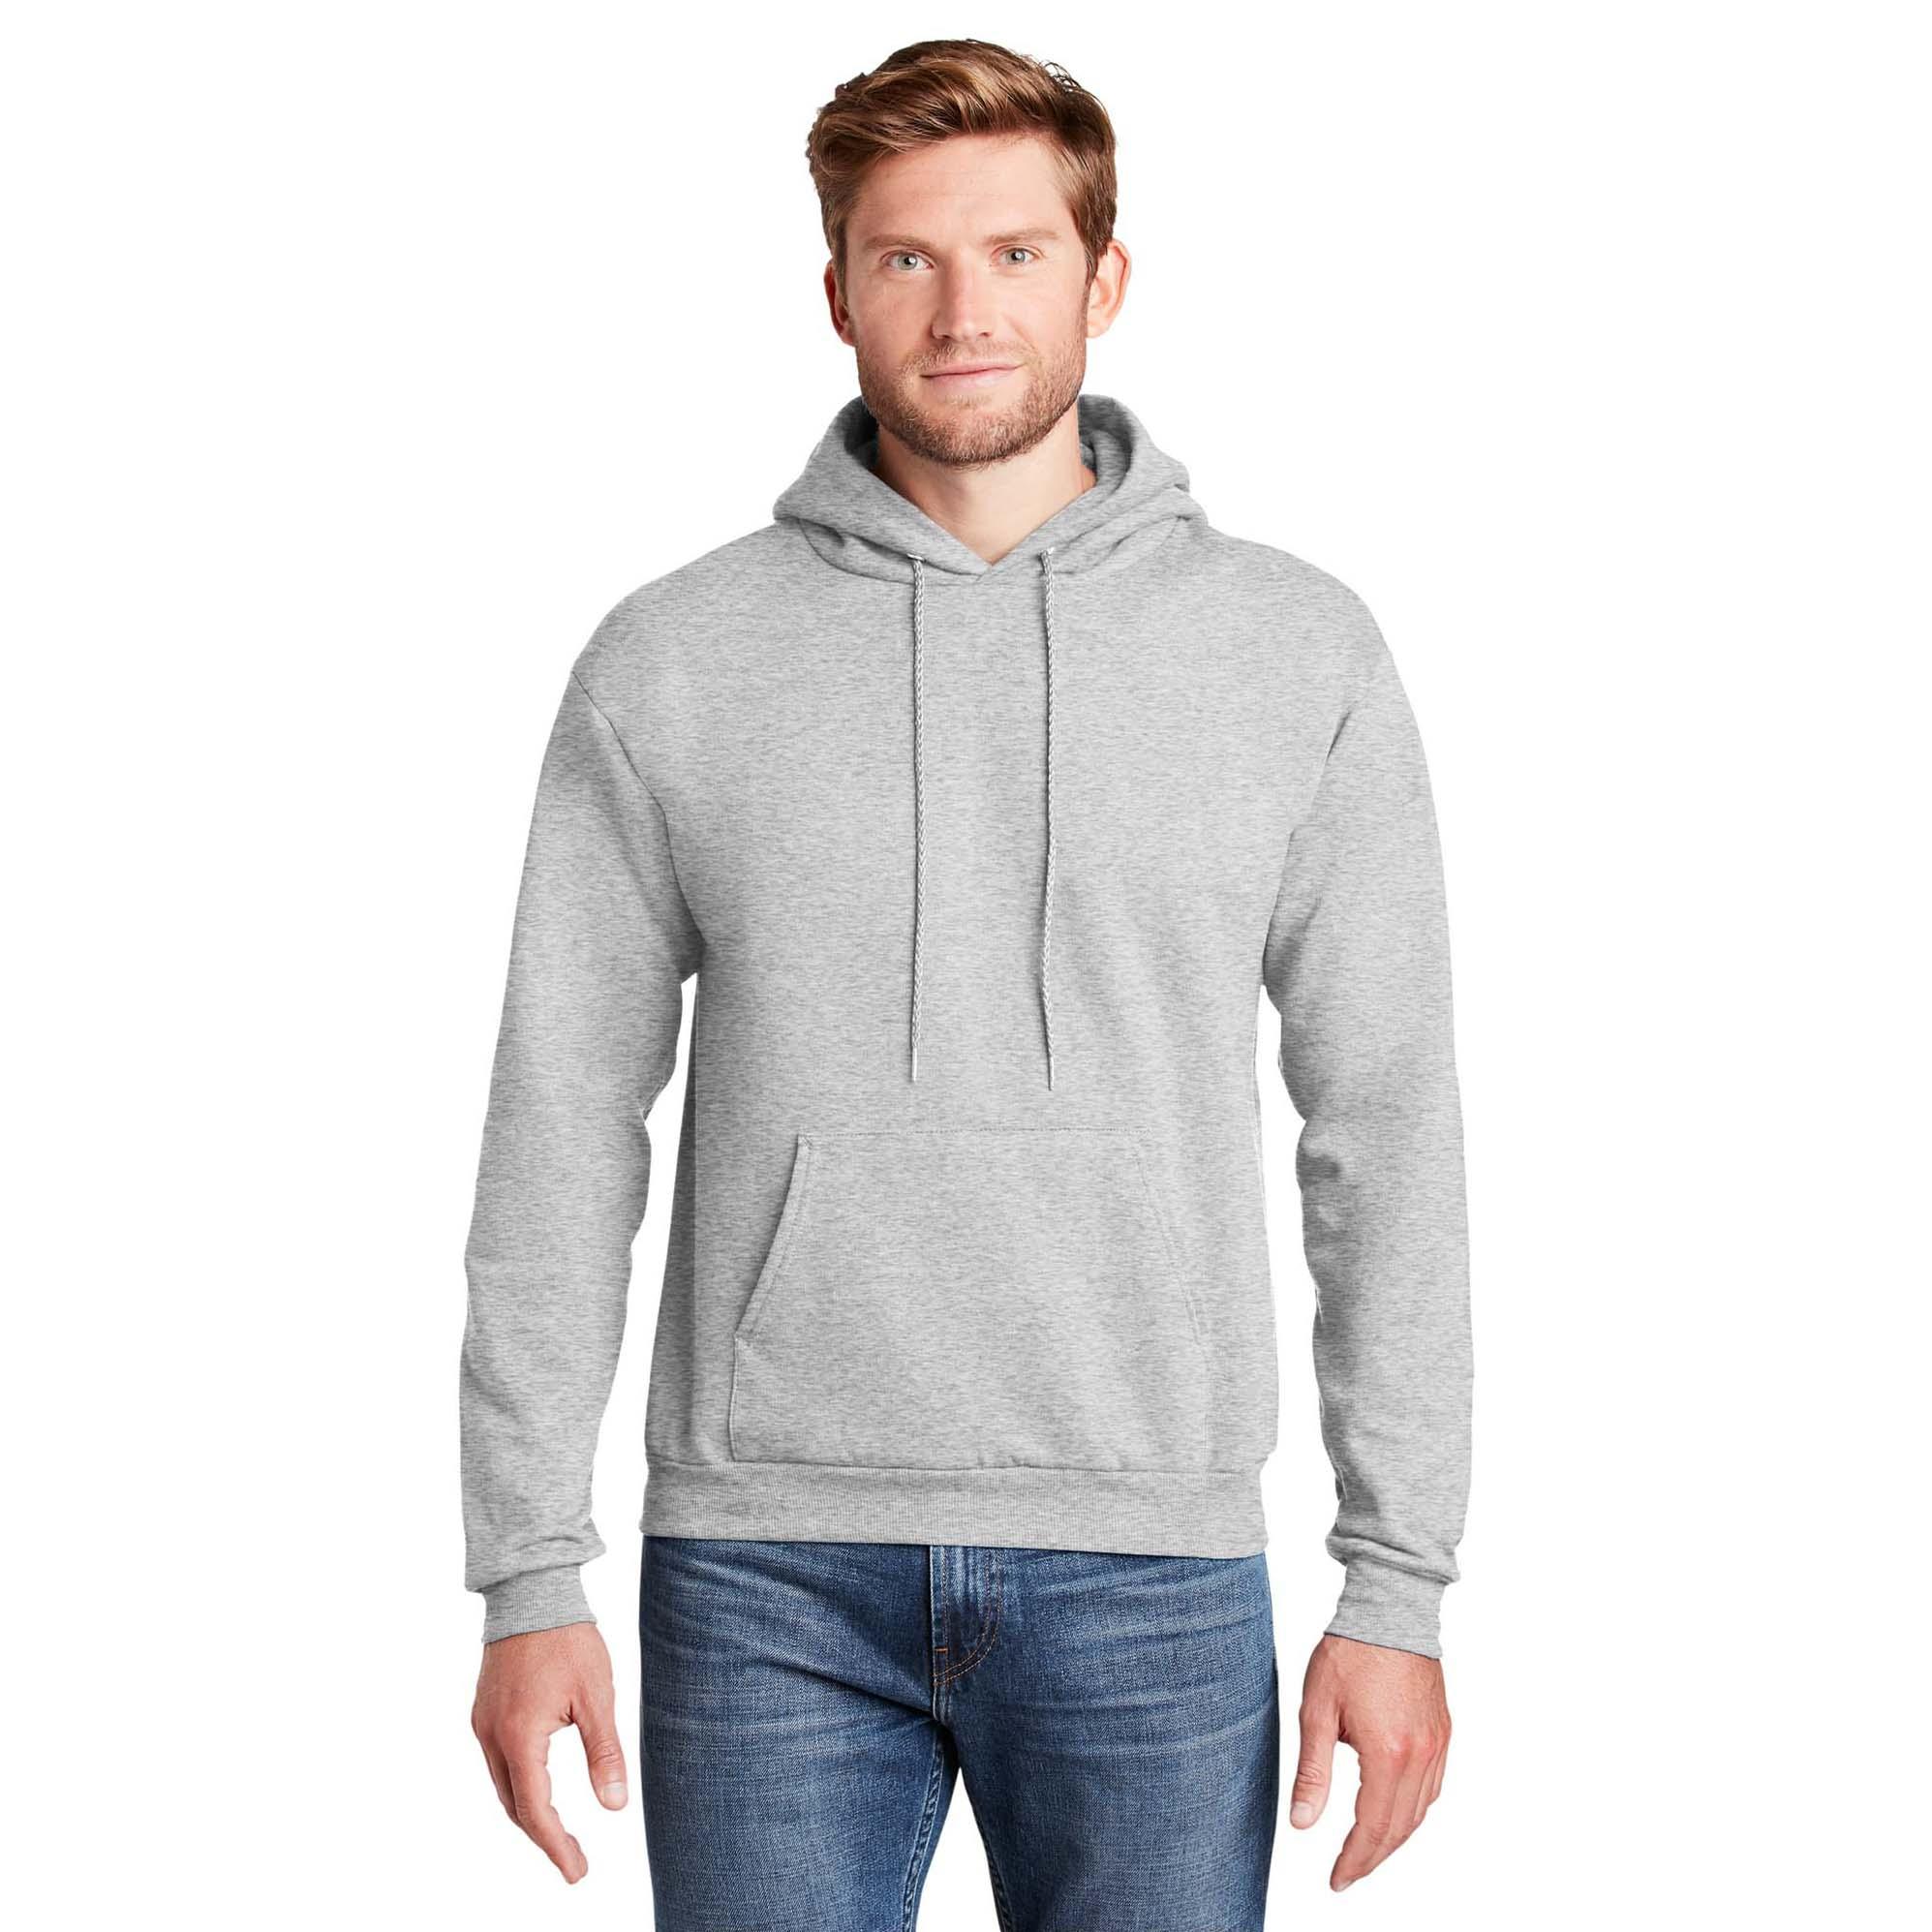 Hanes P170 EcoSmart Pullover Hooded Sweatshirt - Ash | Full Source